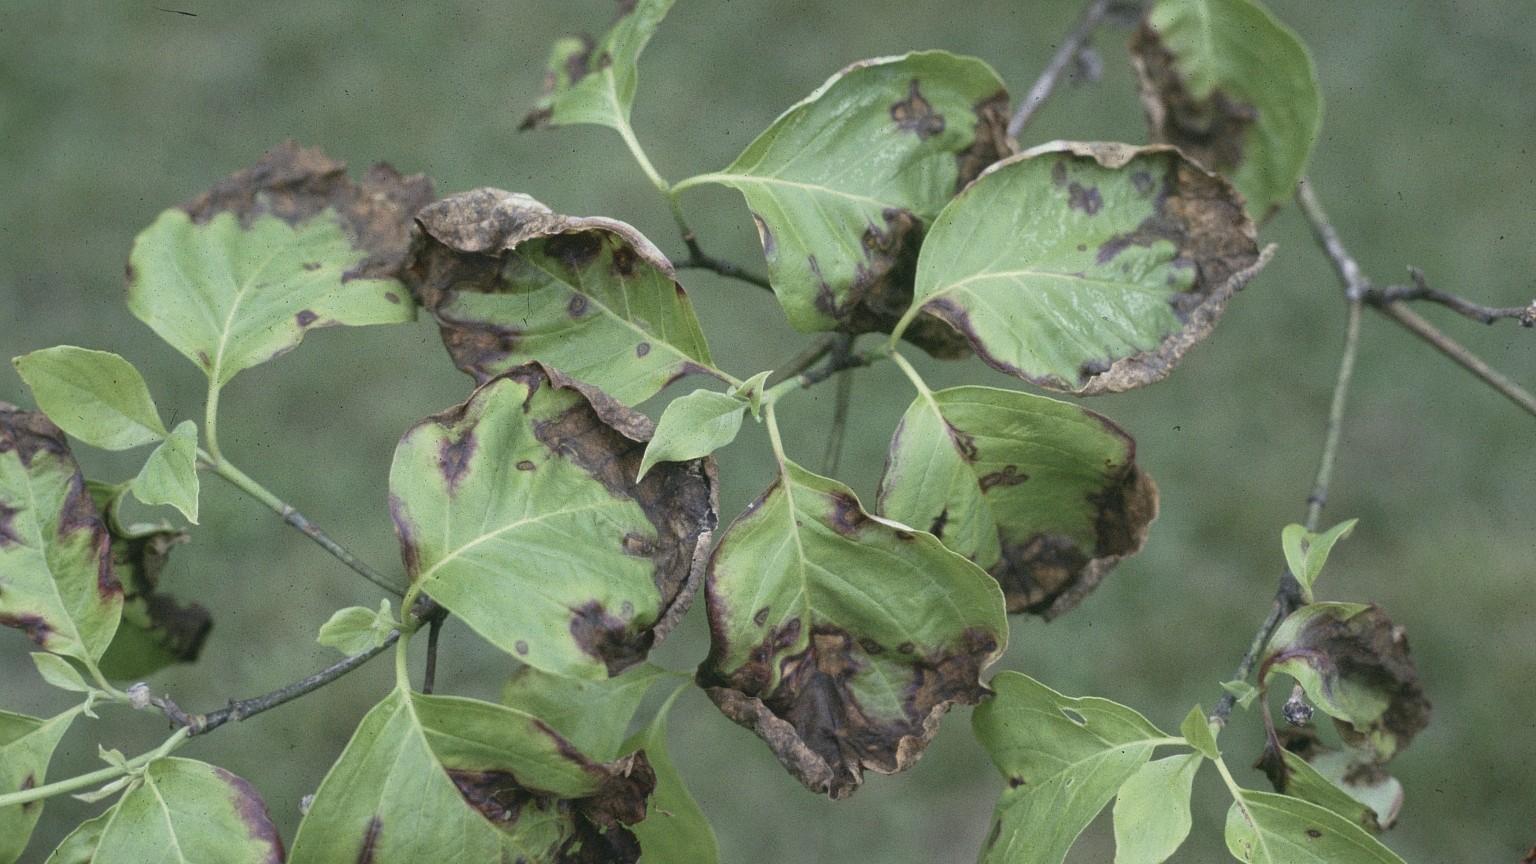 leaf spots and blackening on dogwood - anthracnose symptoms